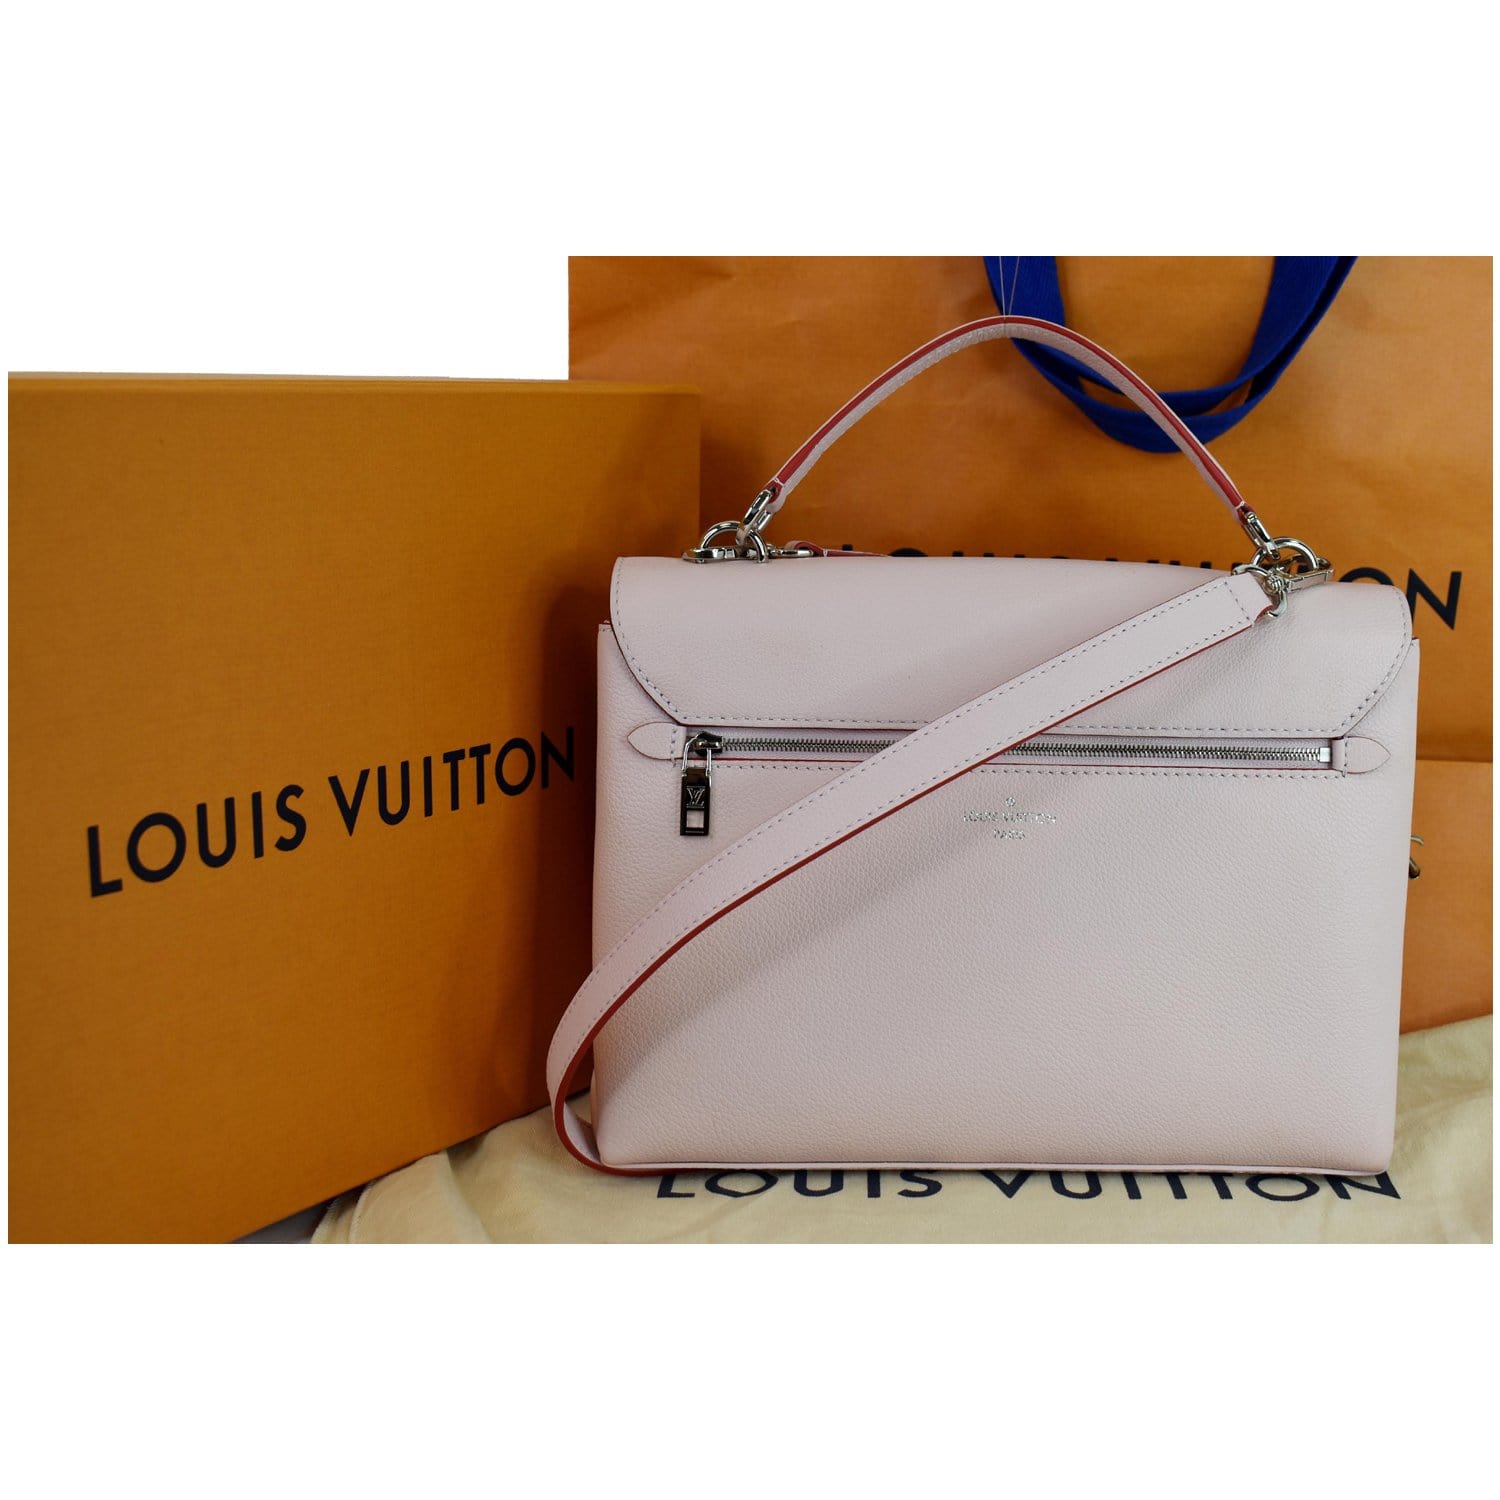 Sell Louis Vuitton MyLockMe Bag - Pink